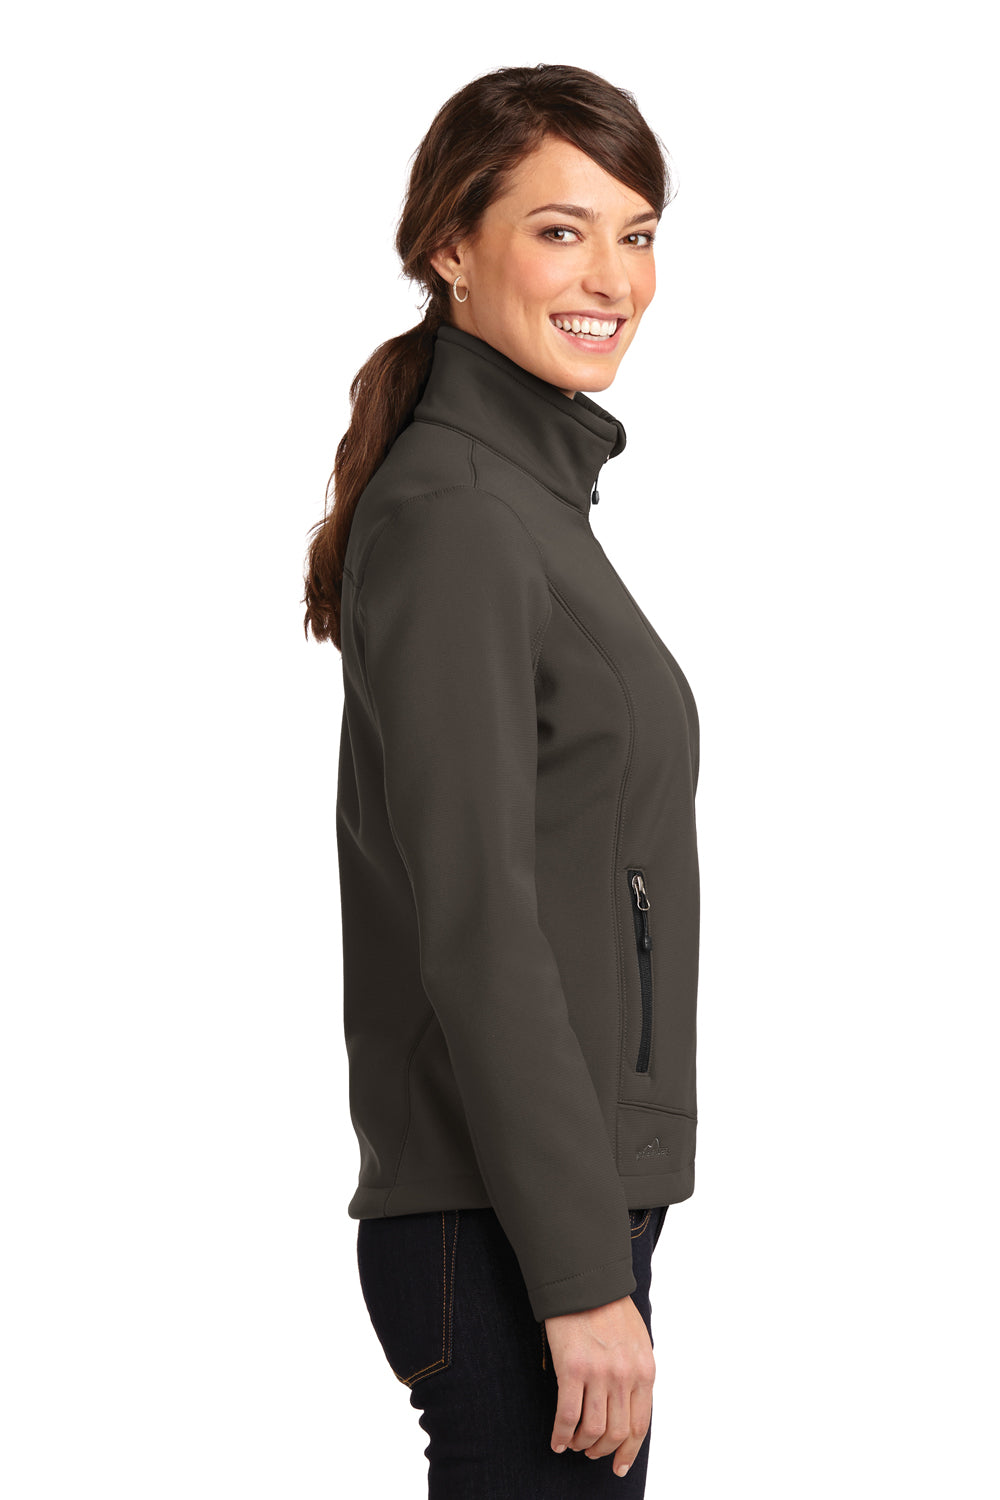 Eddie Bauer EB535 Womens Rugged Water Resistant Full Zip Jacket Canteen Grey Side